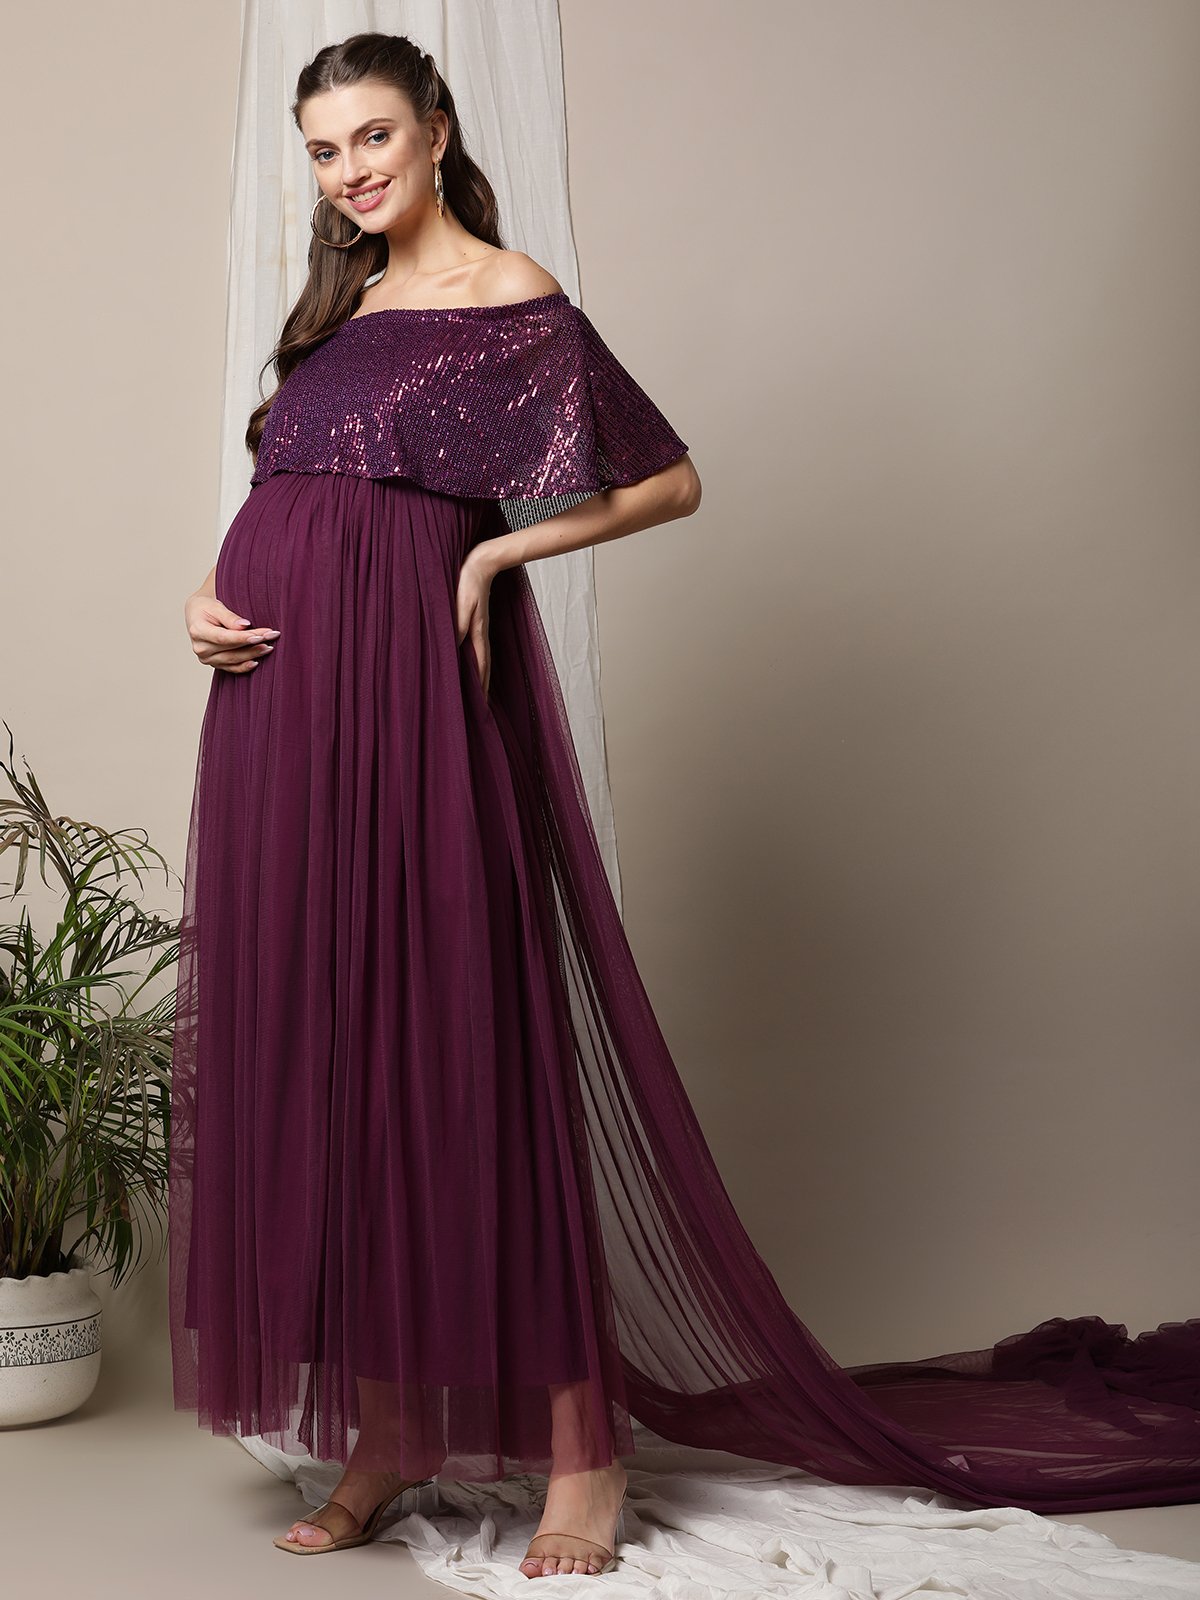 maternity photoshoot gown purple